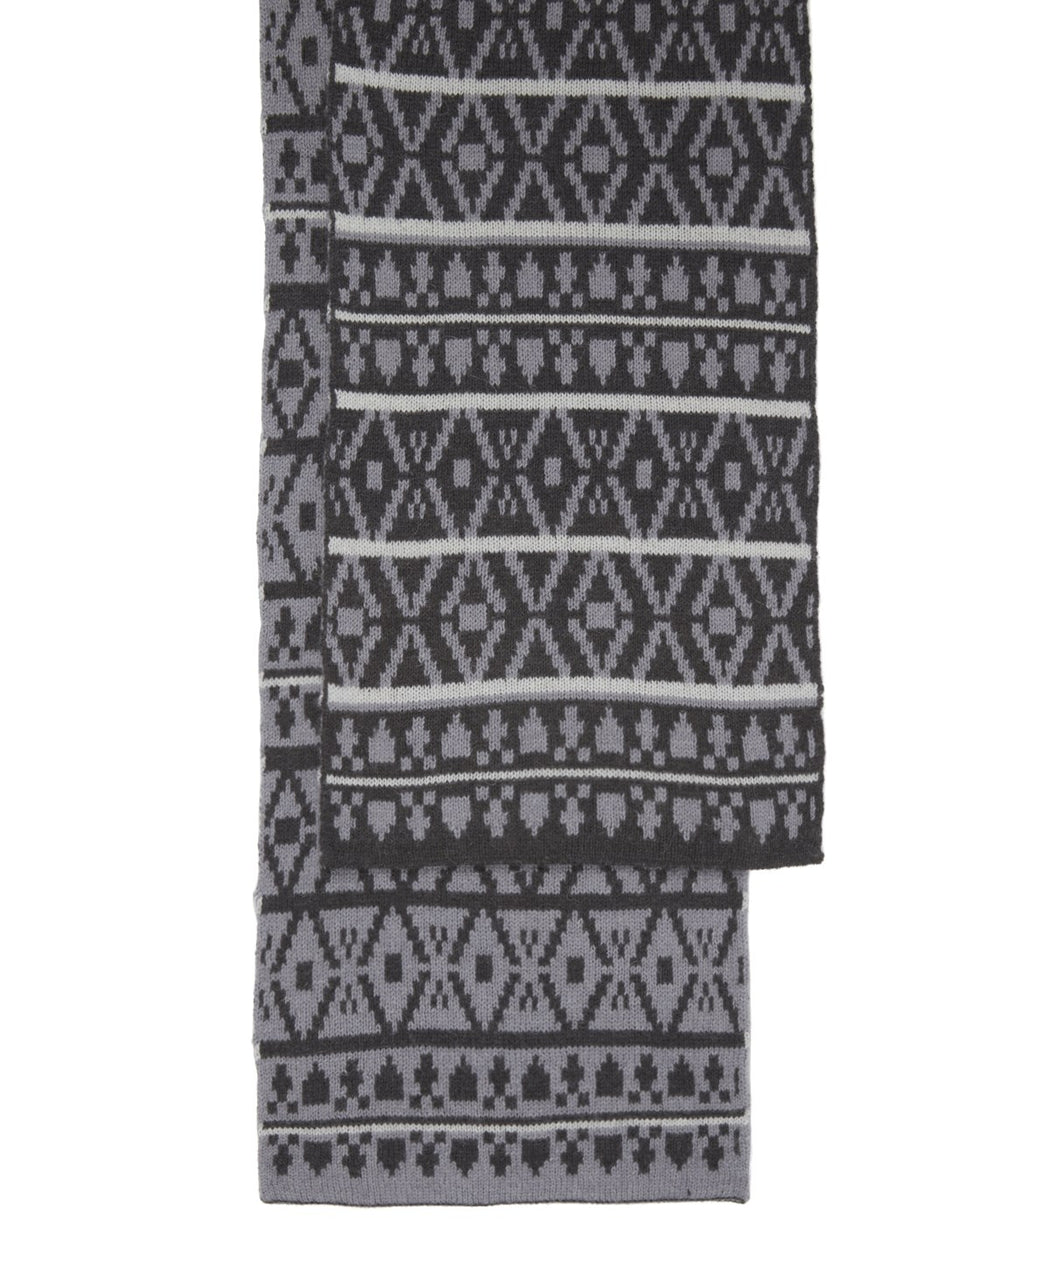 Logan Square Knit Black Scarf | Wool Scarves | Tie Bar